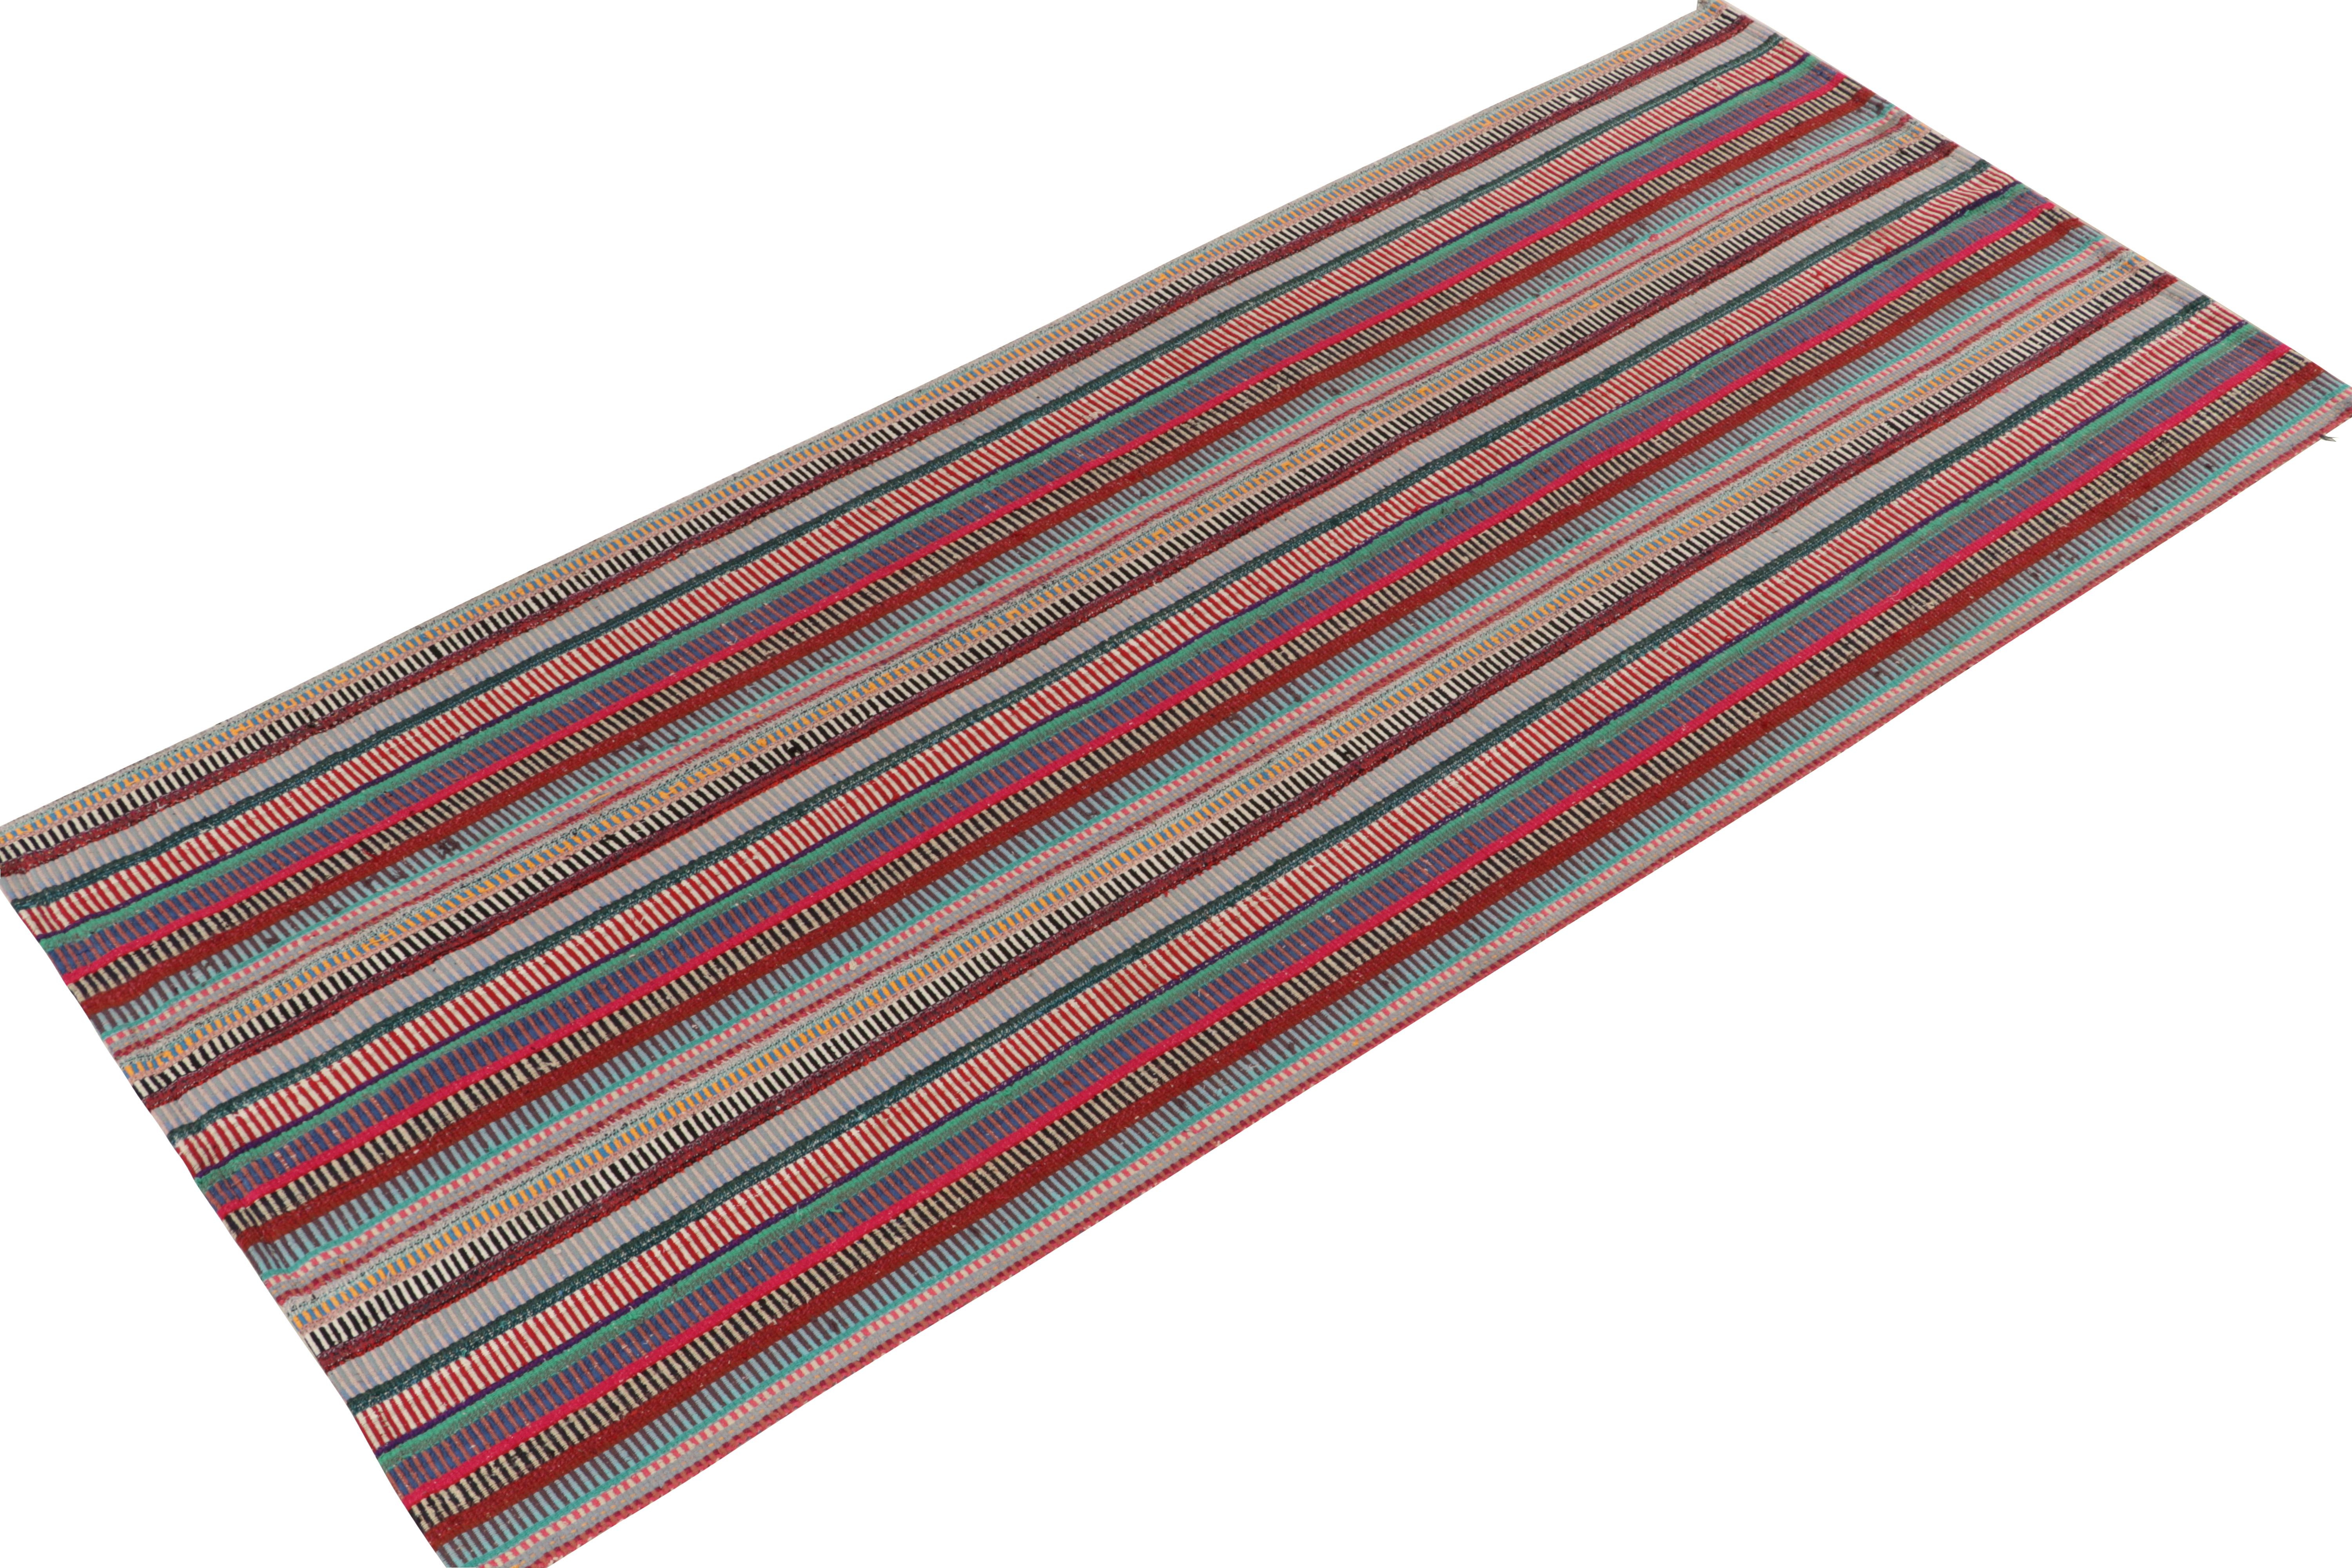 Turkish 1950s Vintage Chaput Kilim Rug in Stripes, Multicolor Patterns by Rug & Kilim For Sale